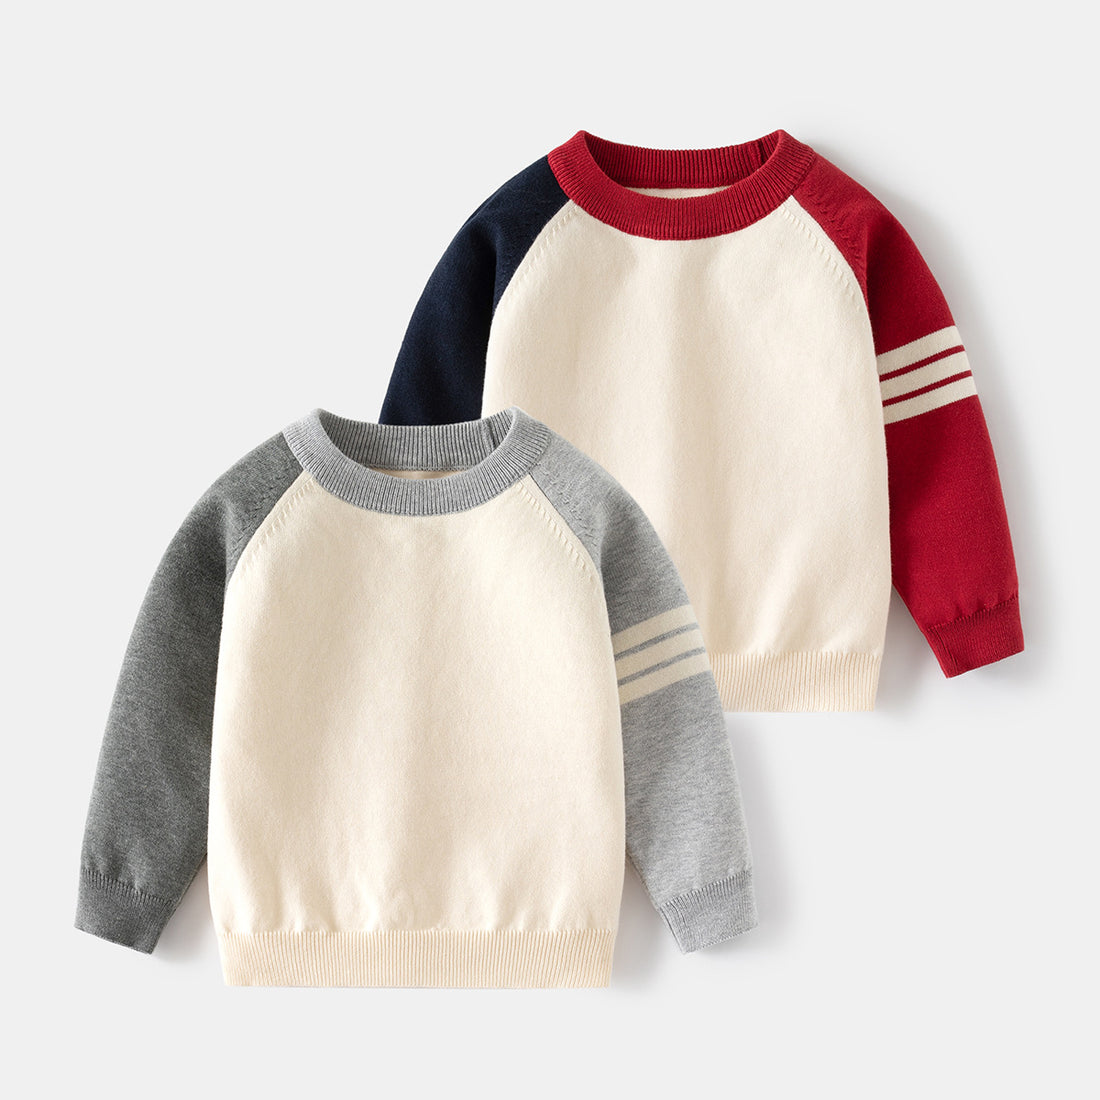 [5131071] - Baju Atasan Sweater Gradasi Fashion Import Anak Laki-Laki - Motif Hand Stripes